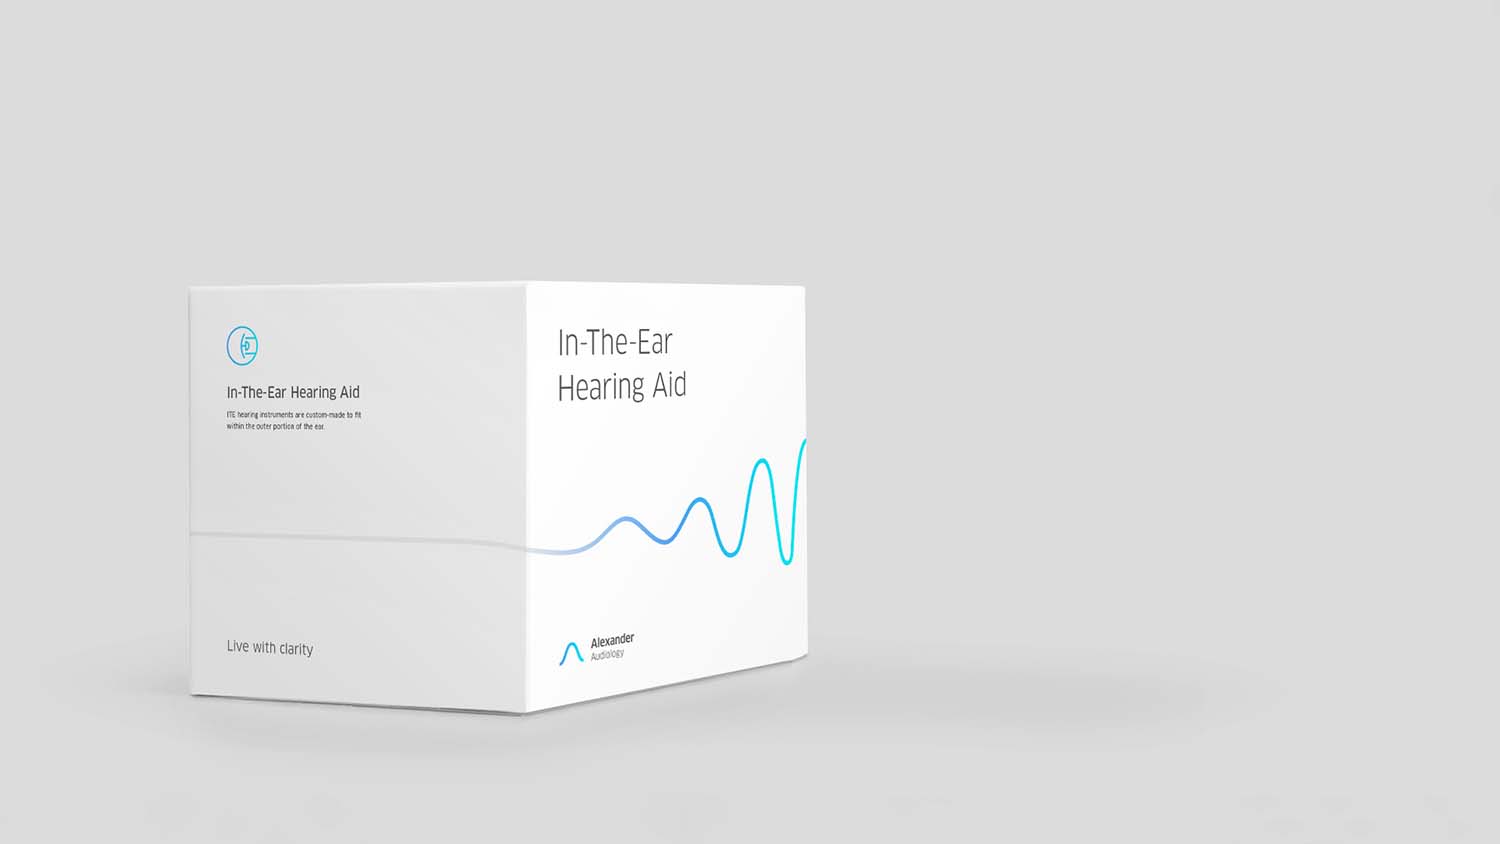 Alexander 听力训练医疗机构品牌VI设计-极致简洁线性设计